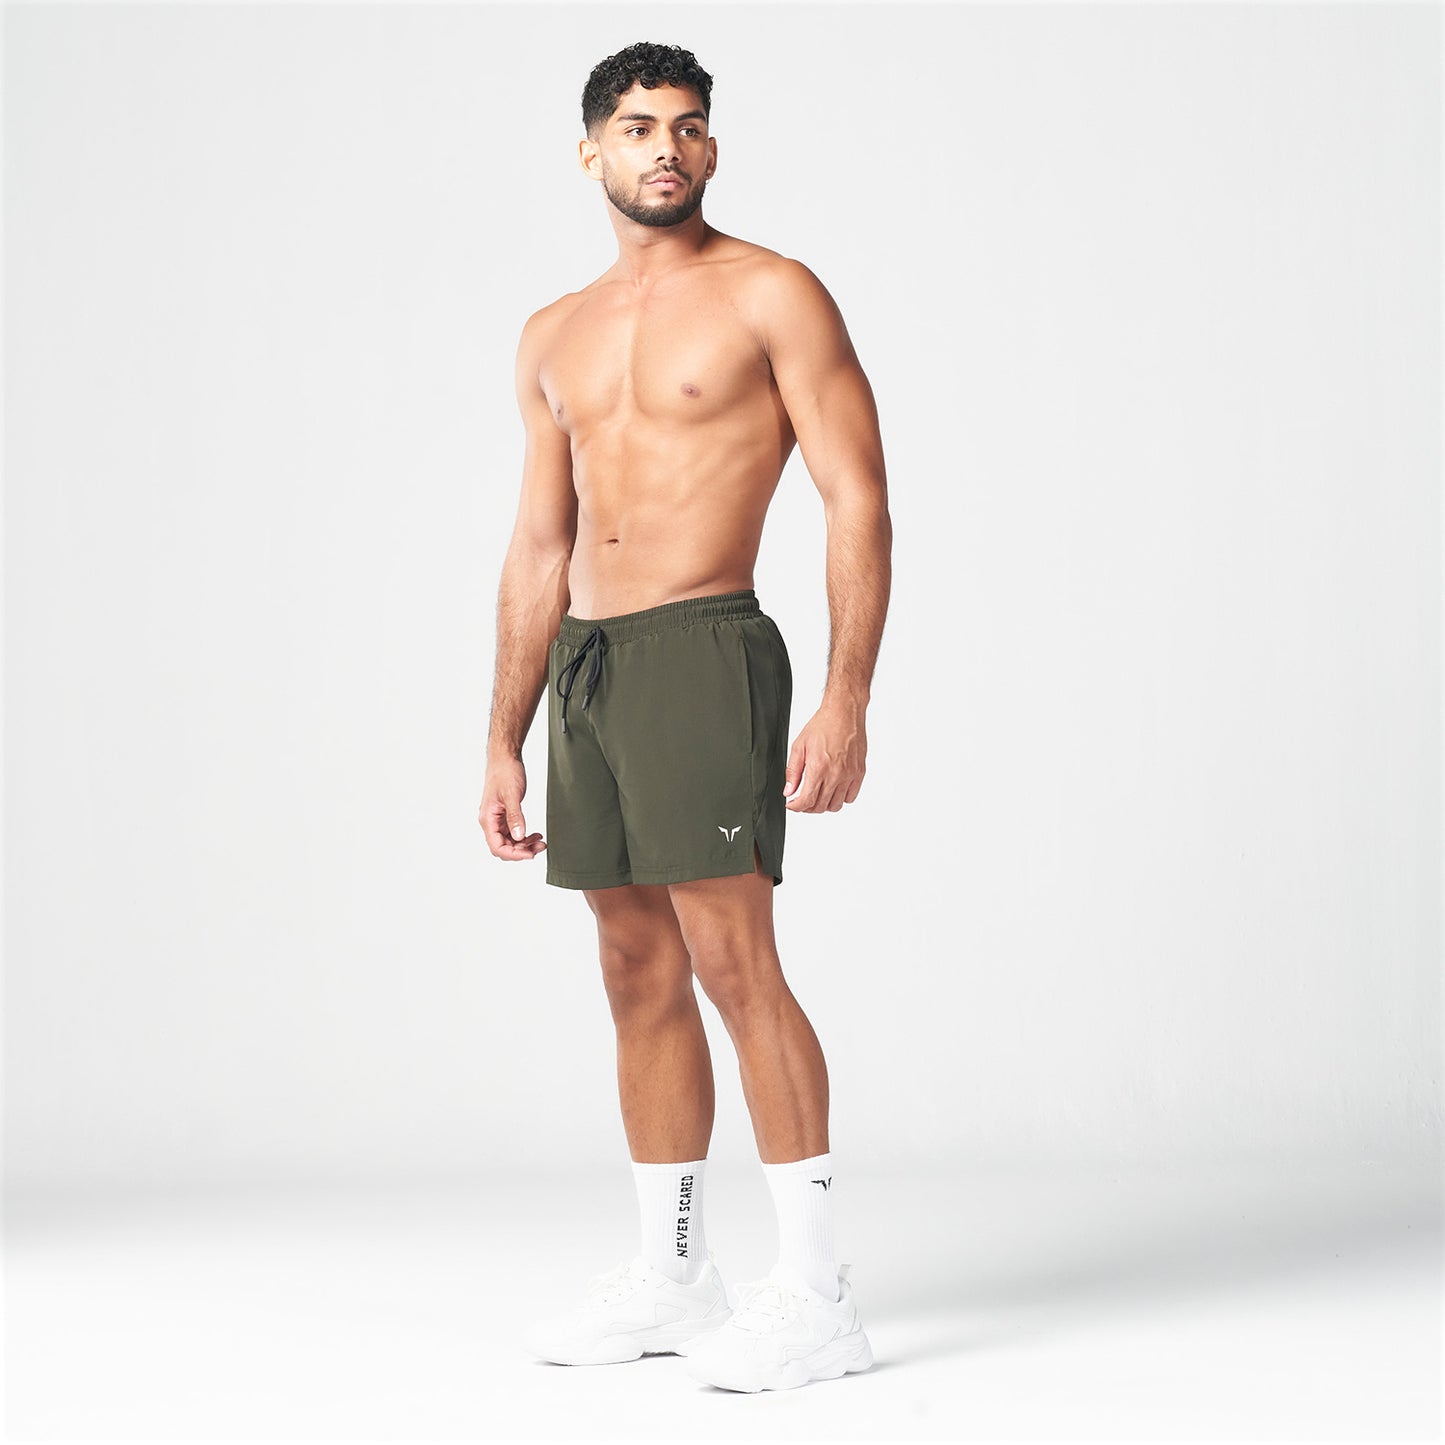 squatwolf-gym-wear-essential-5-inch-shorts-khaki-workout-short-for-men